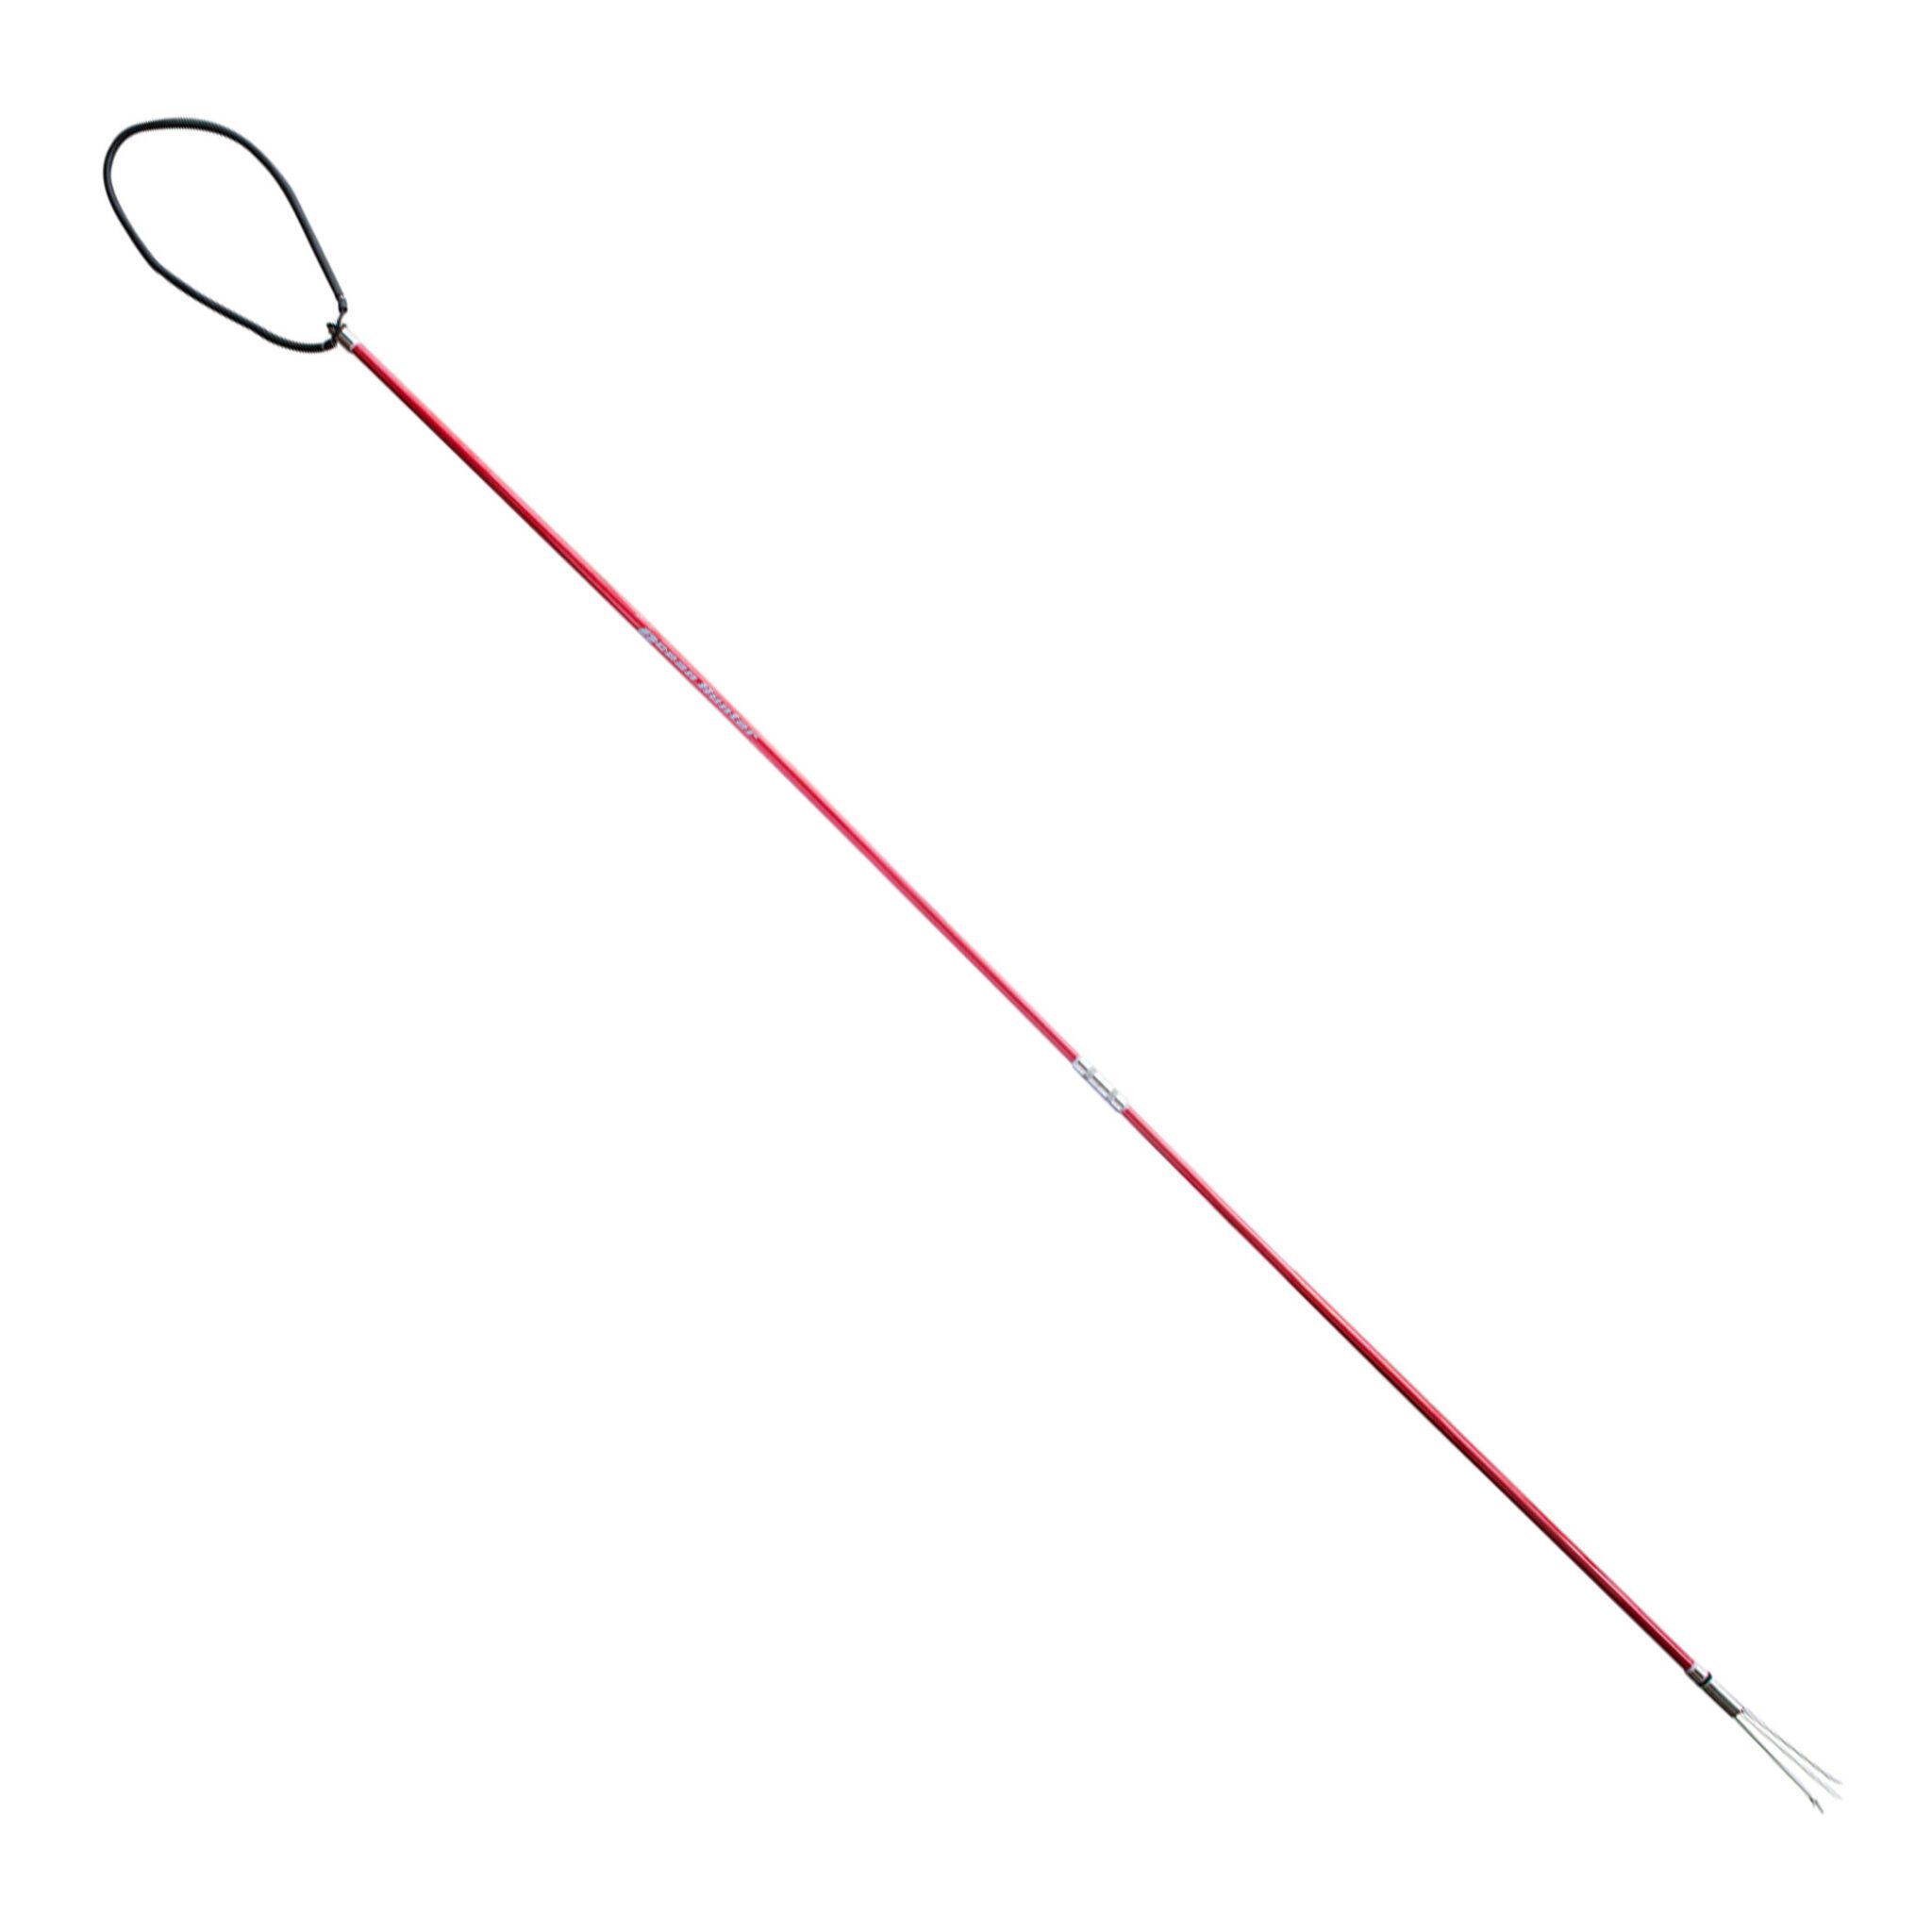 https://divegearaustralia.com.au/wp-content/uploads/2019/12/ocean-hunter-hand-spear-1-5m-red-length-scaled.jpg